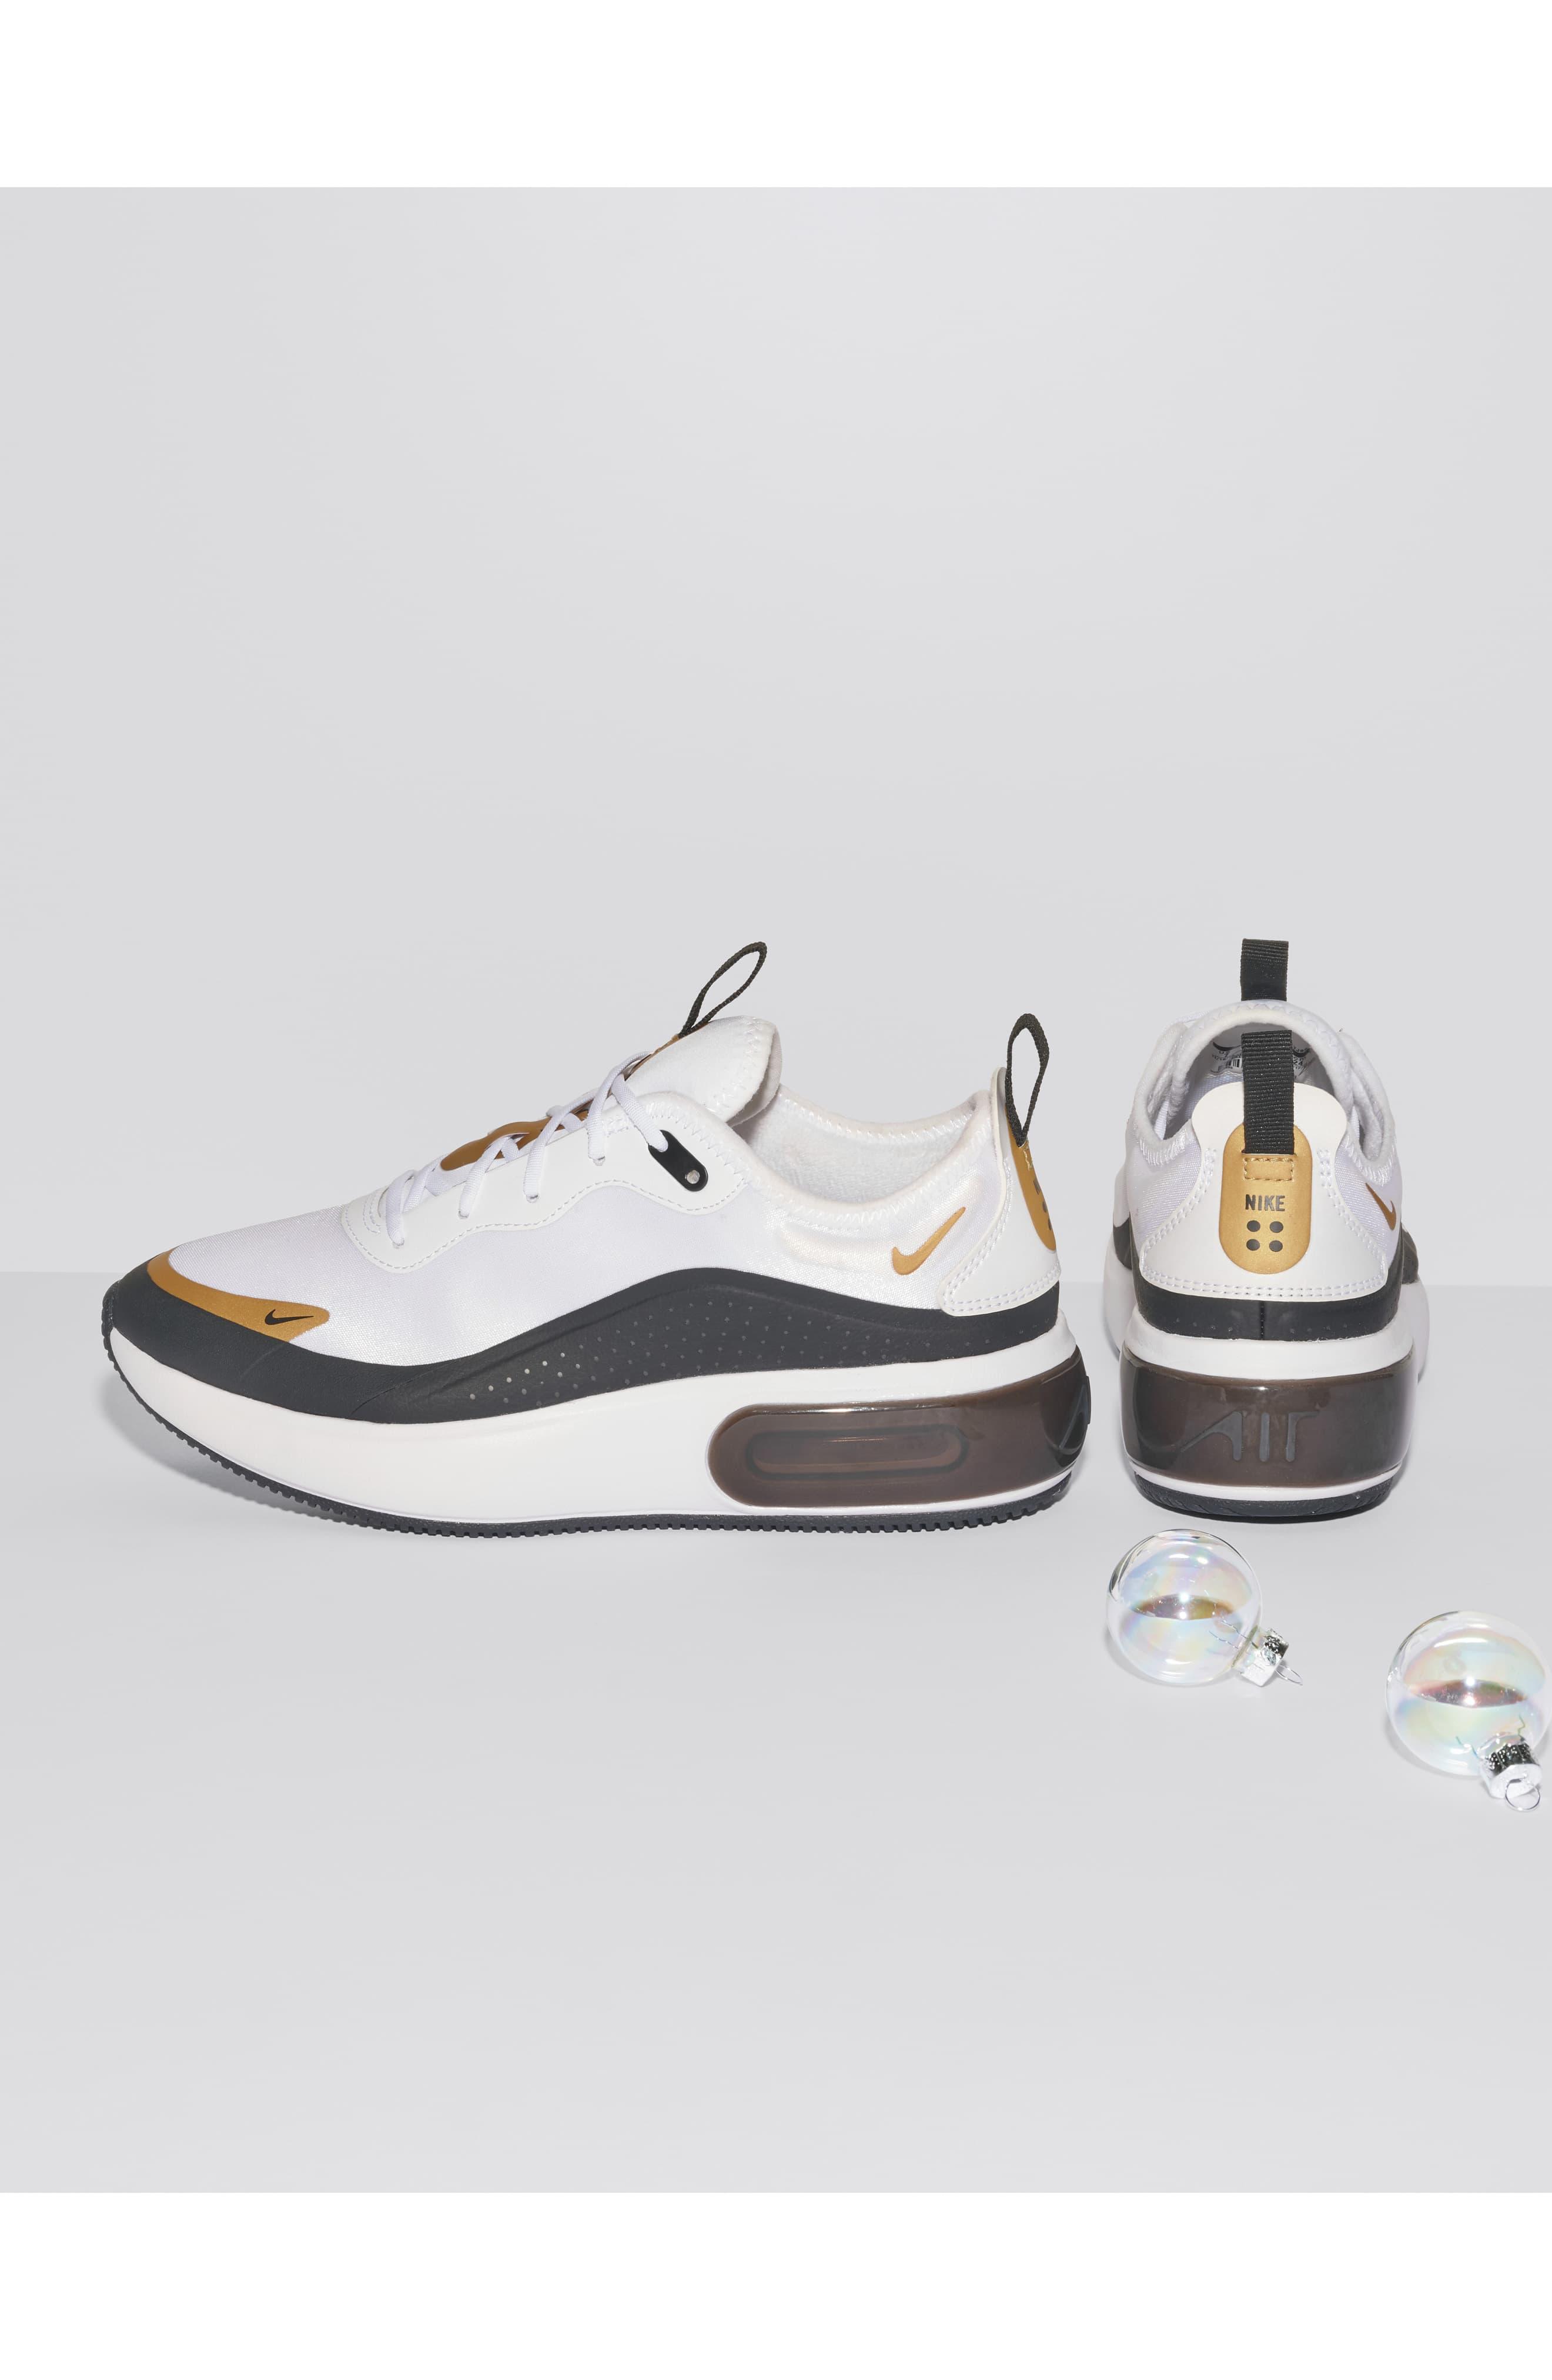 Nike Rubber Air Max Dia Sneaker in White/ Black/ Gold/ Platinum (White) -  Lyst